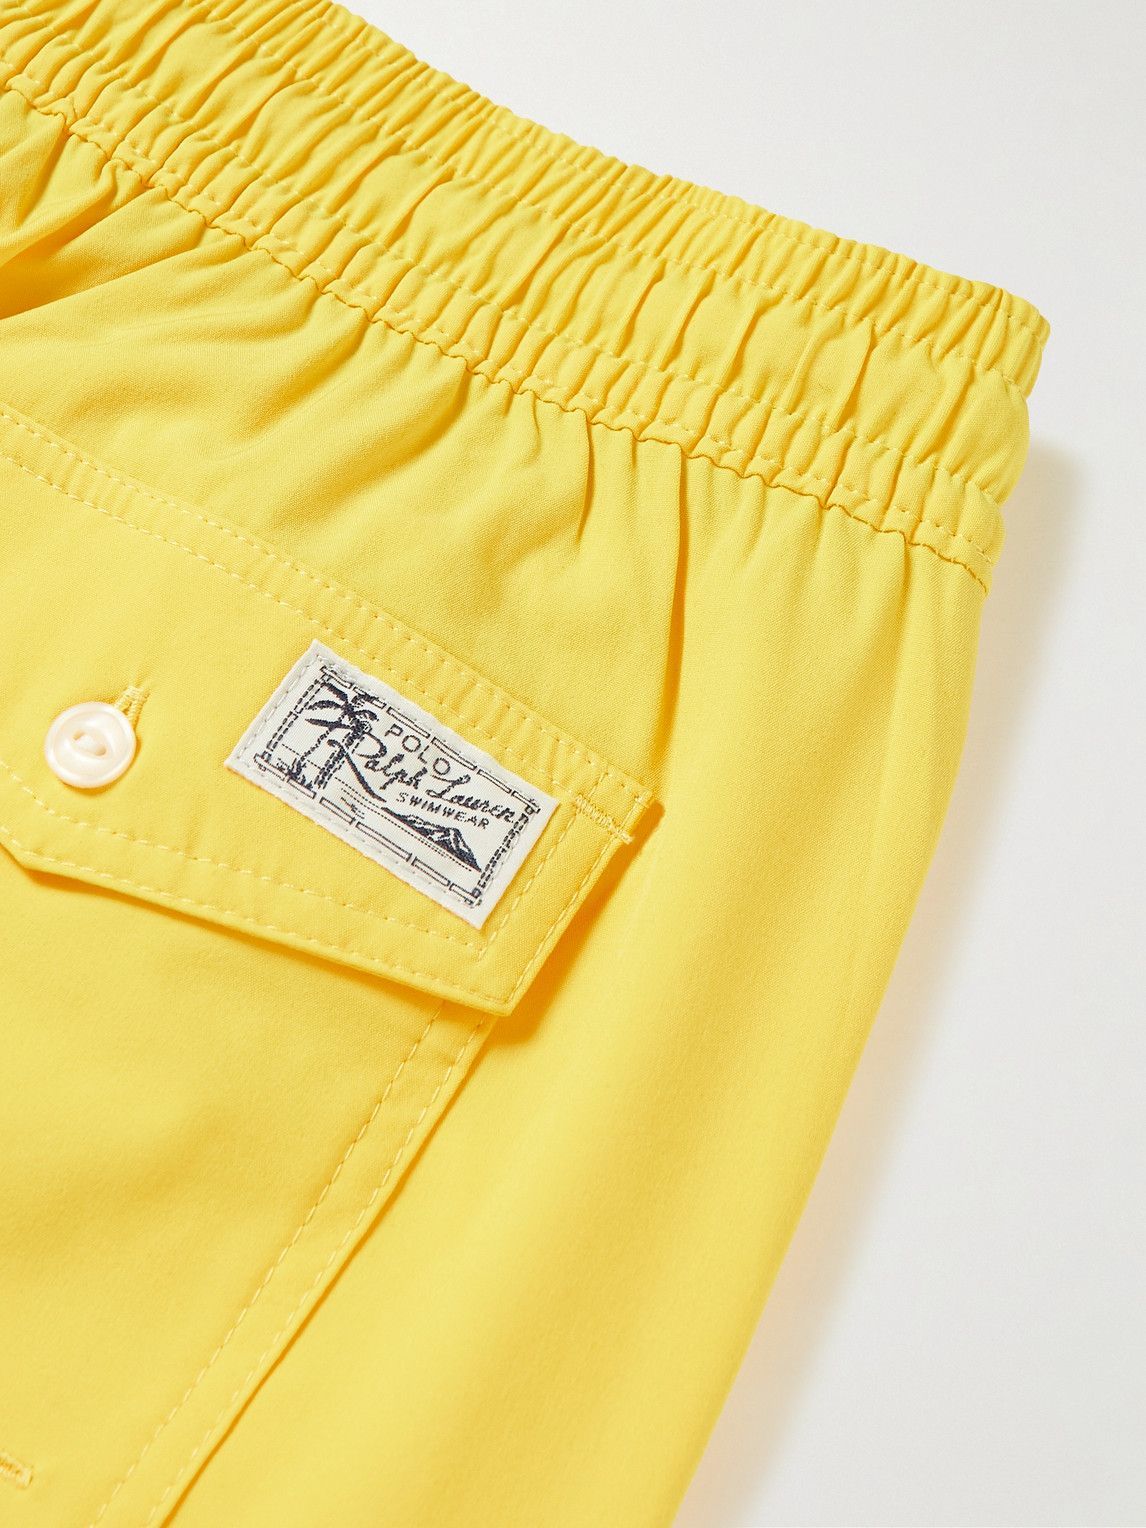 Polo Ralph Lauren - Traveler Mid-Length Recycled Swim Shorts - Yellow